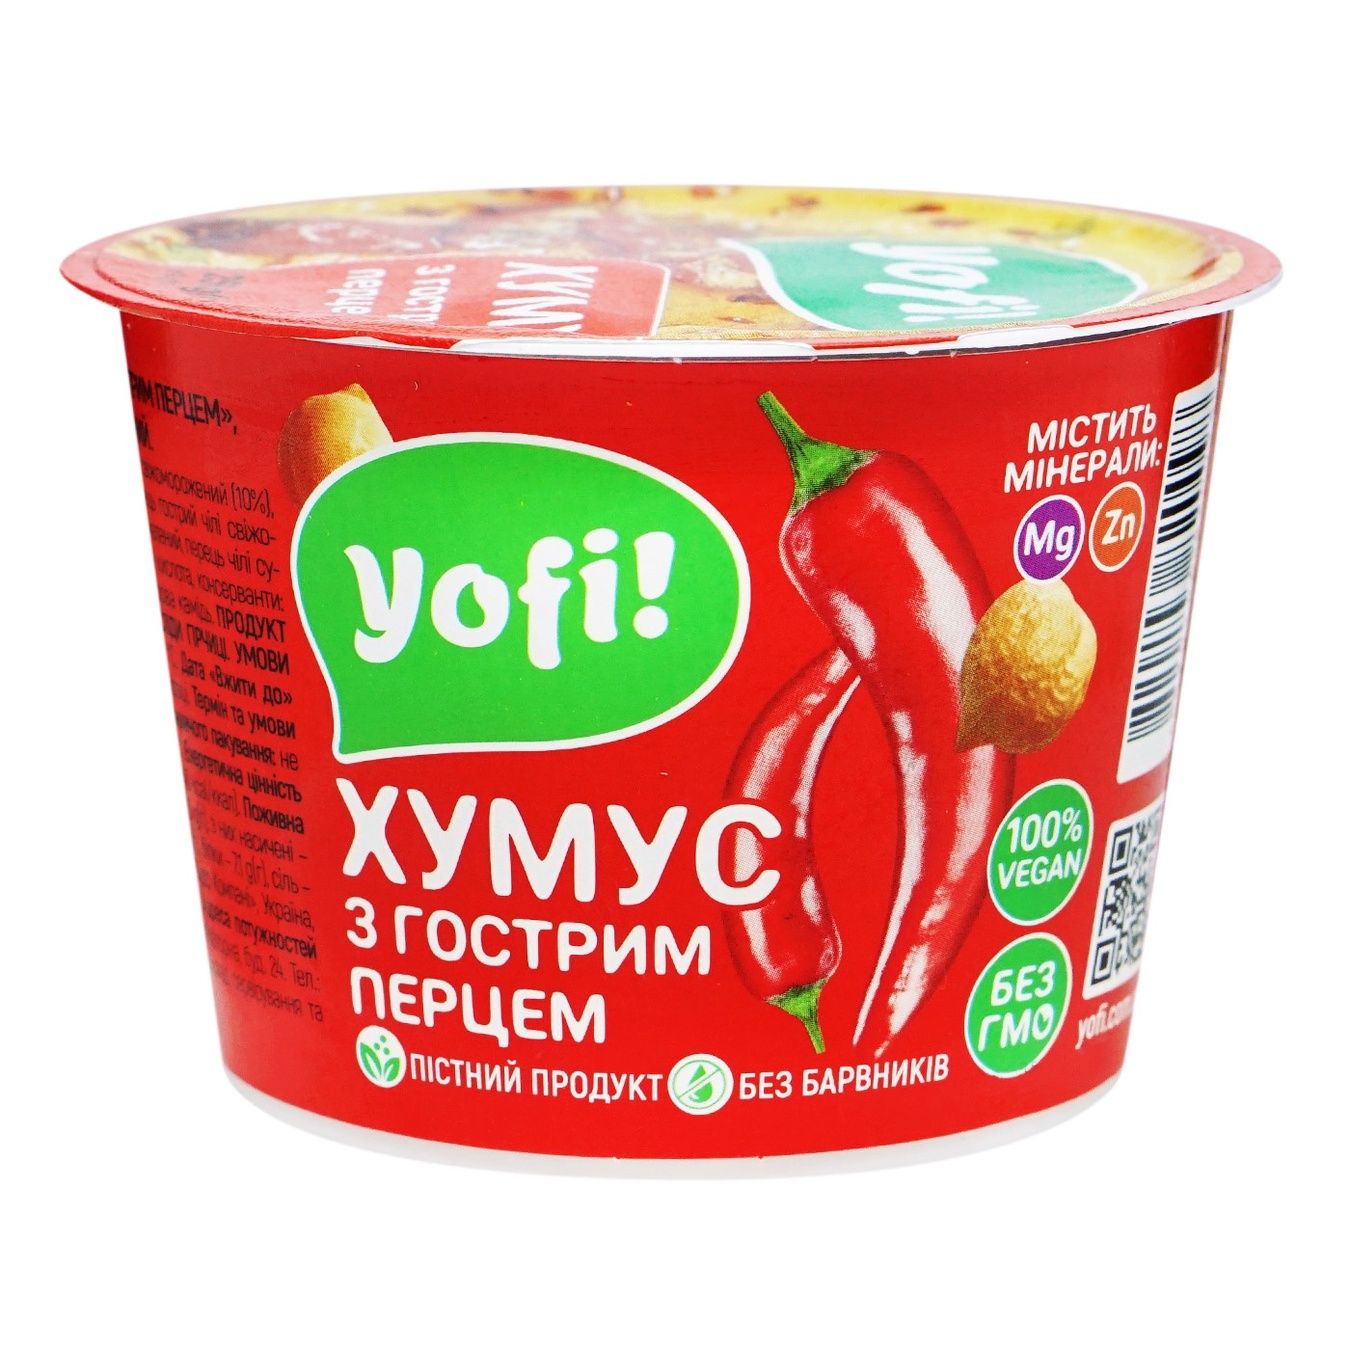 Yofi! Hummus with Hot Pepper 250g